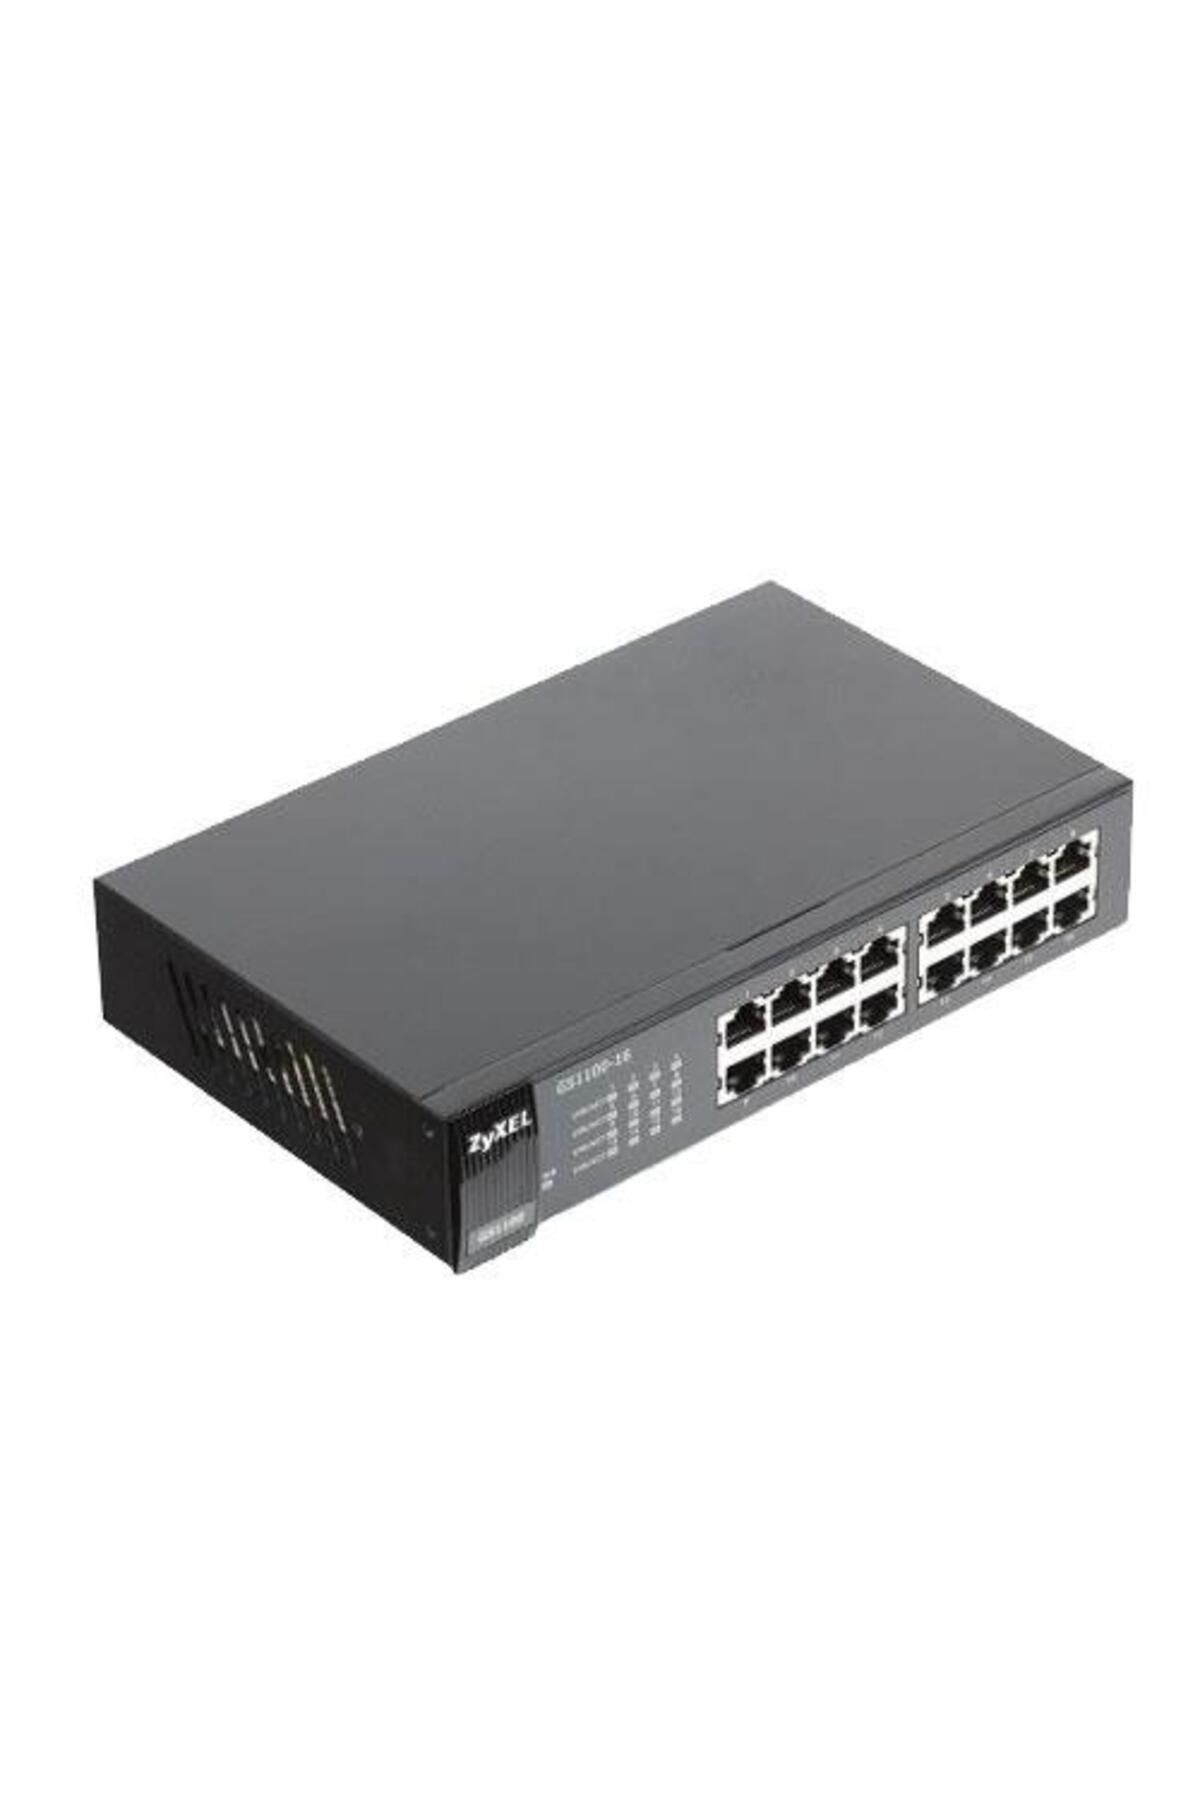 Zyxel Gs1100-16 16 Port 10/100/1000 Yönetilemez Gigabit Switch